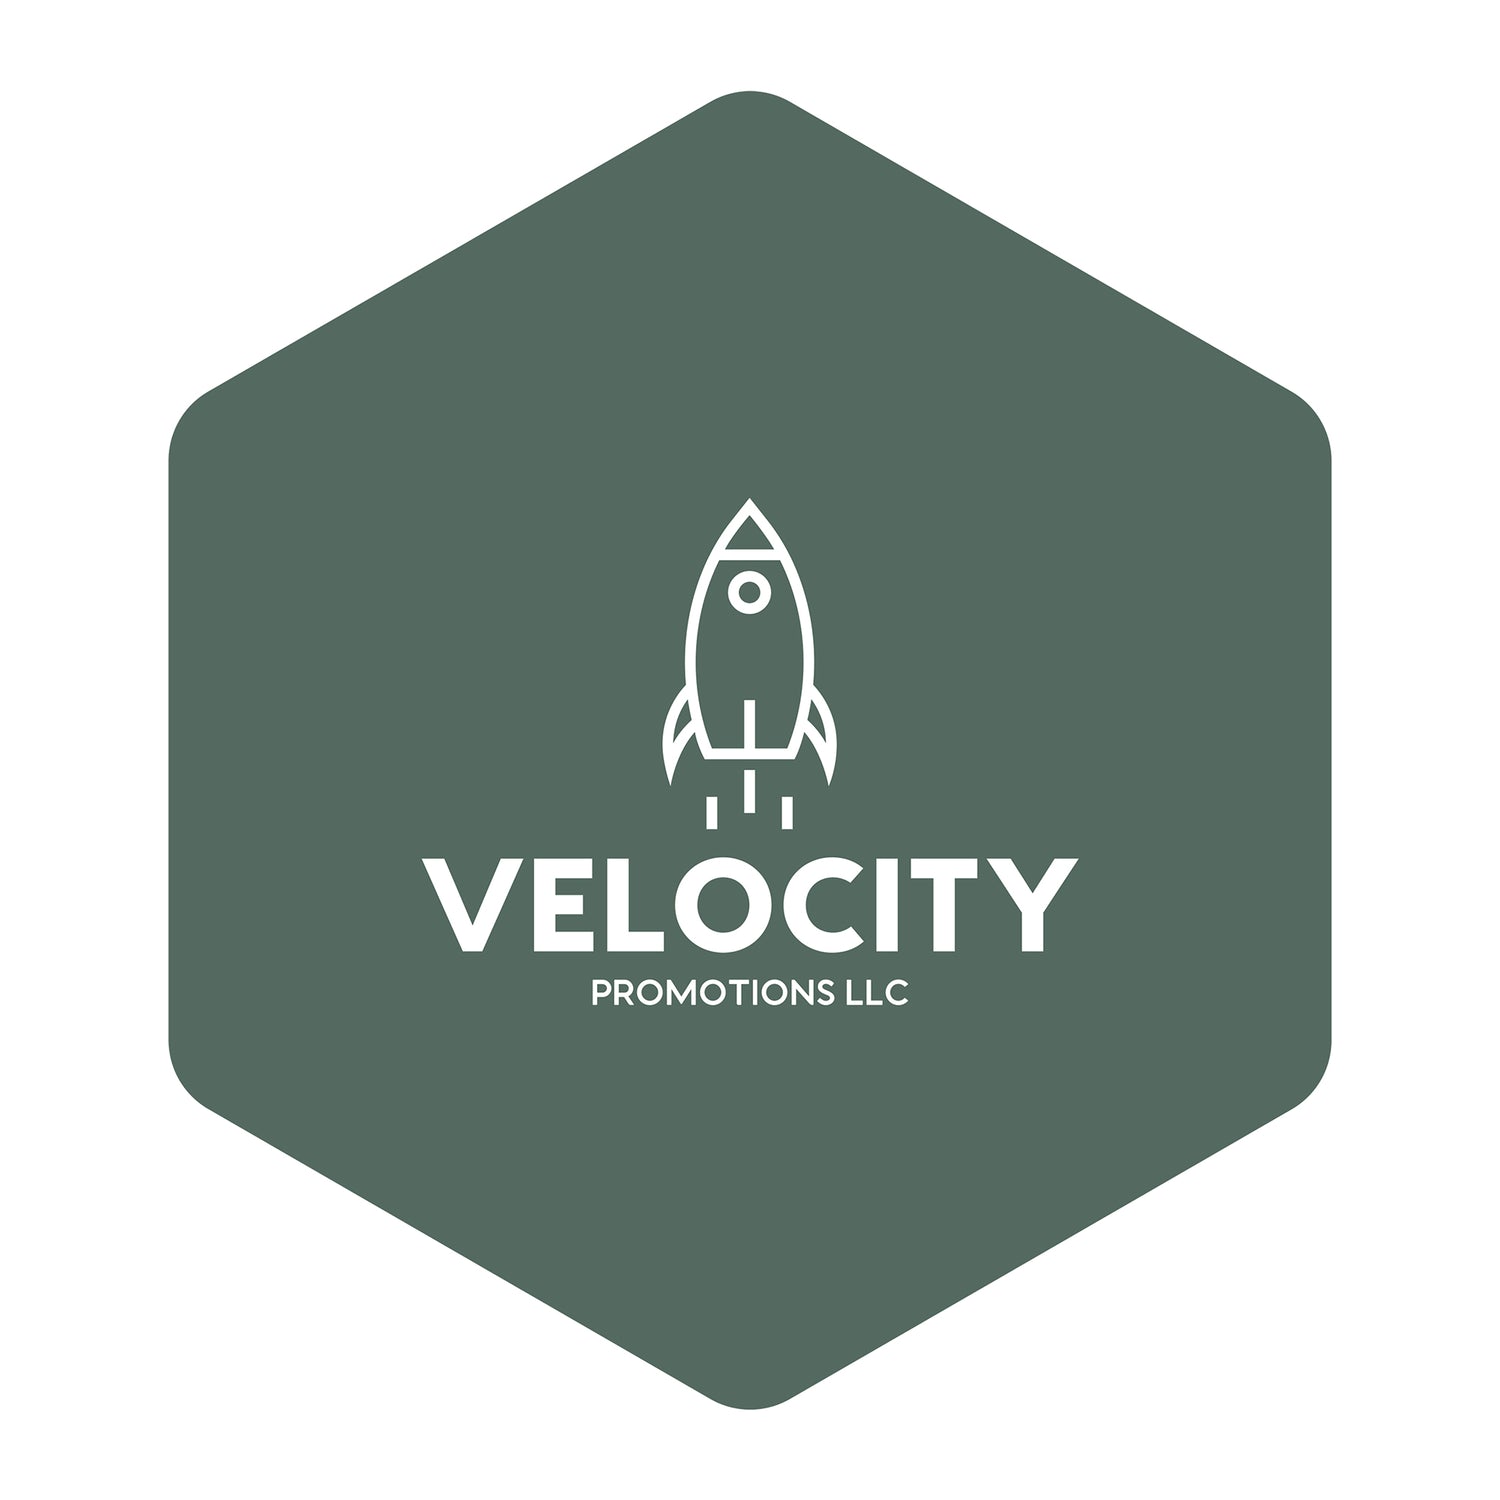 Graphic of Velocity Promotions LLC's Rocket logo